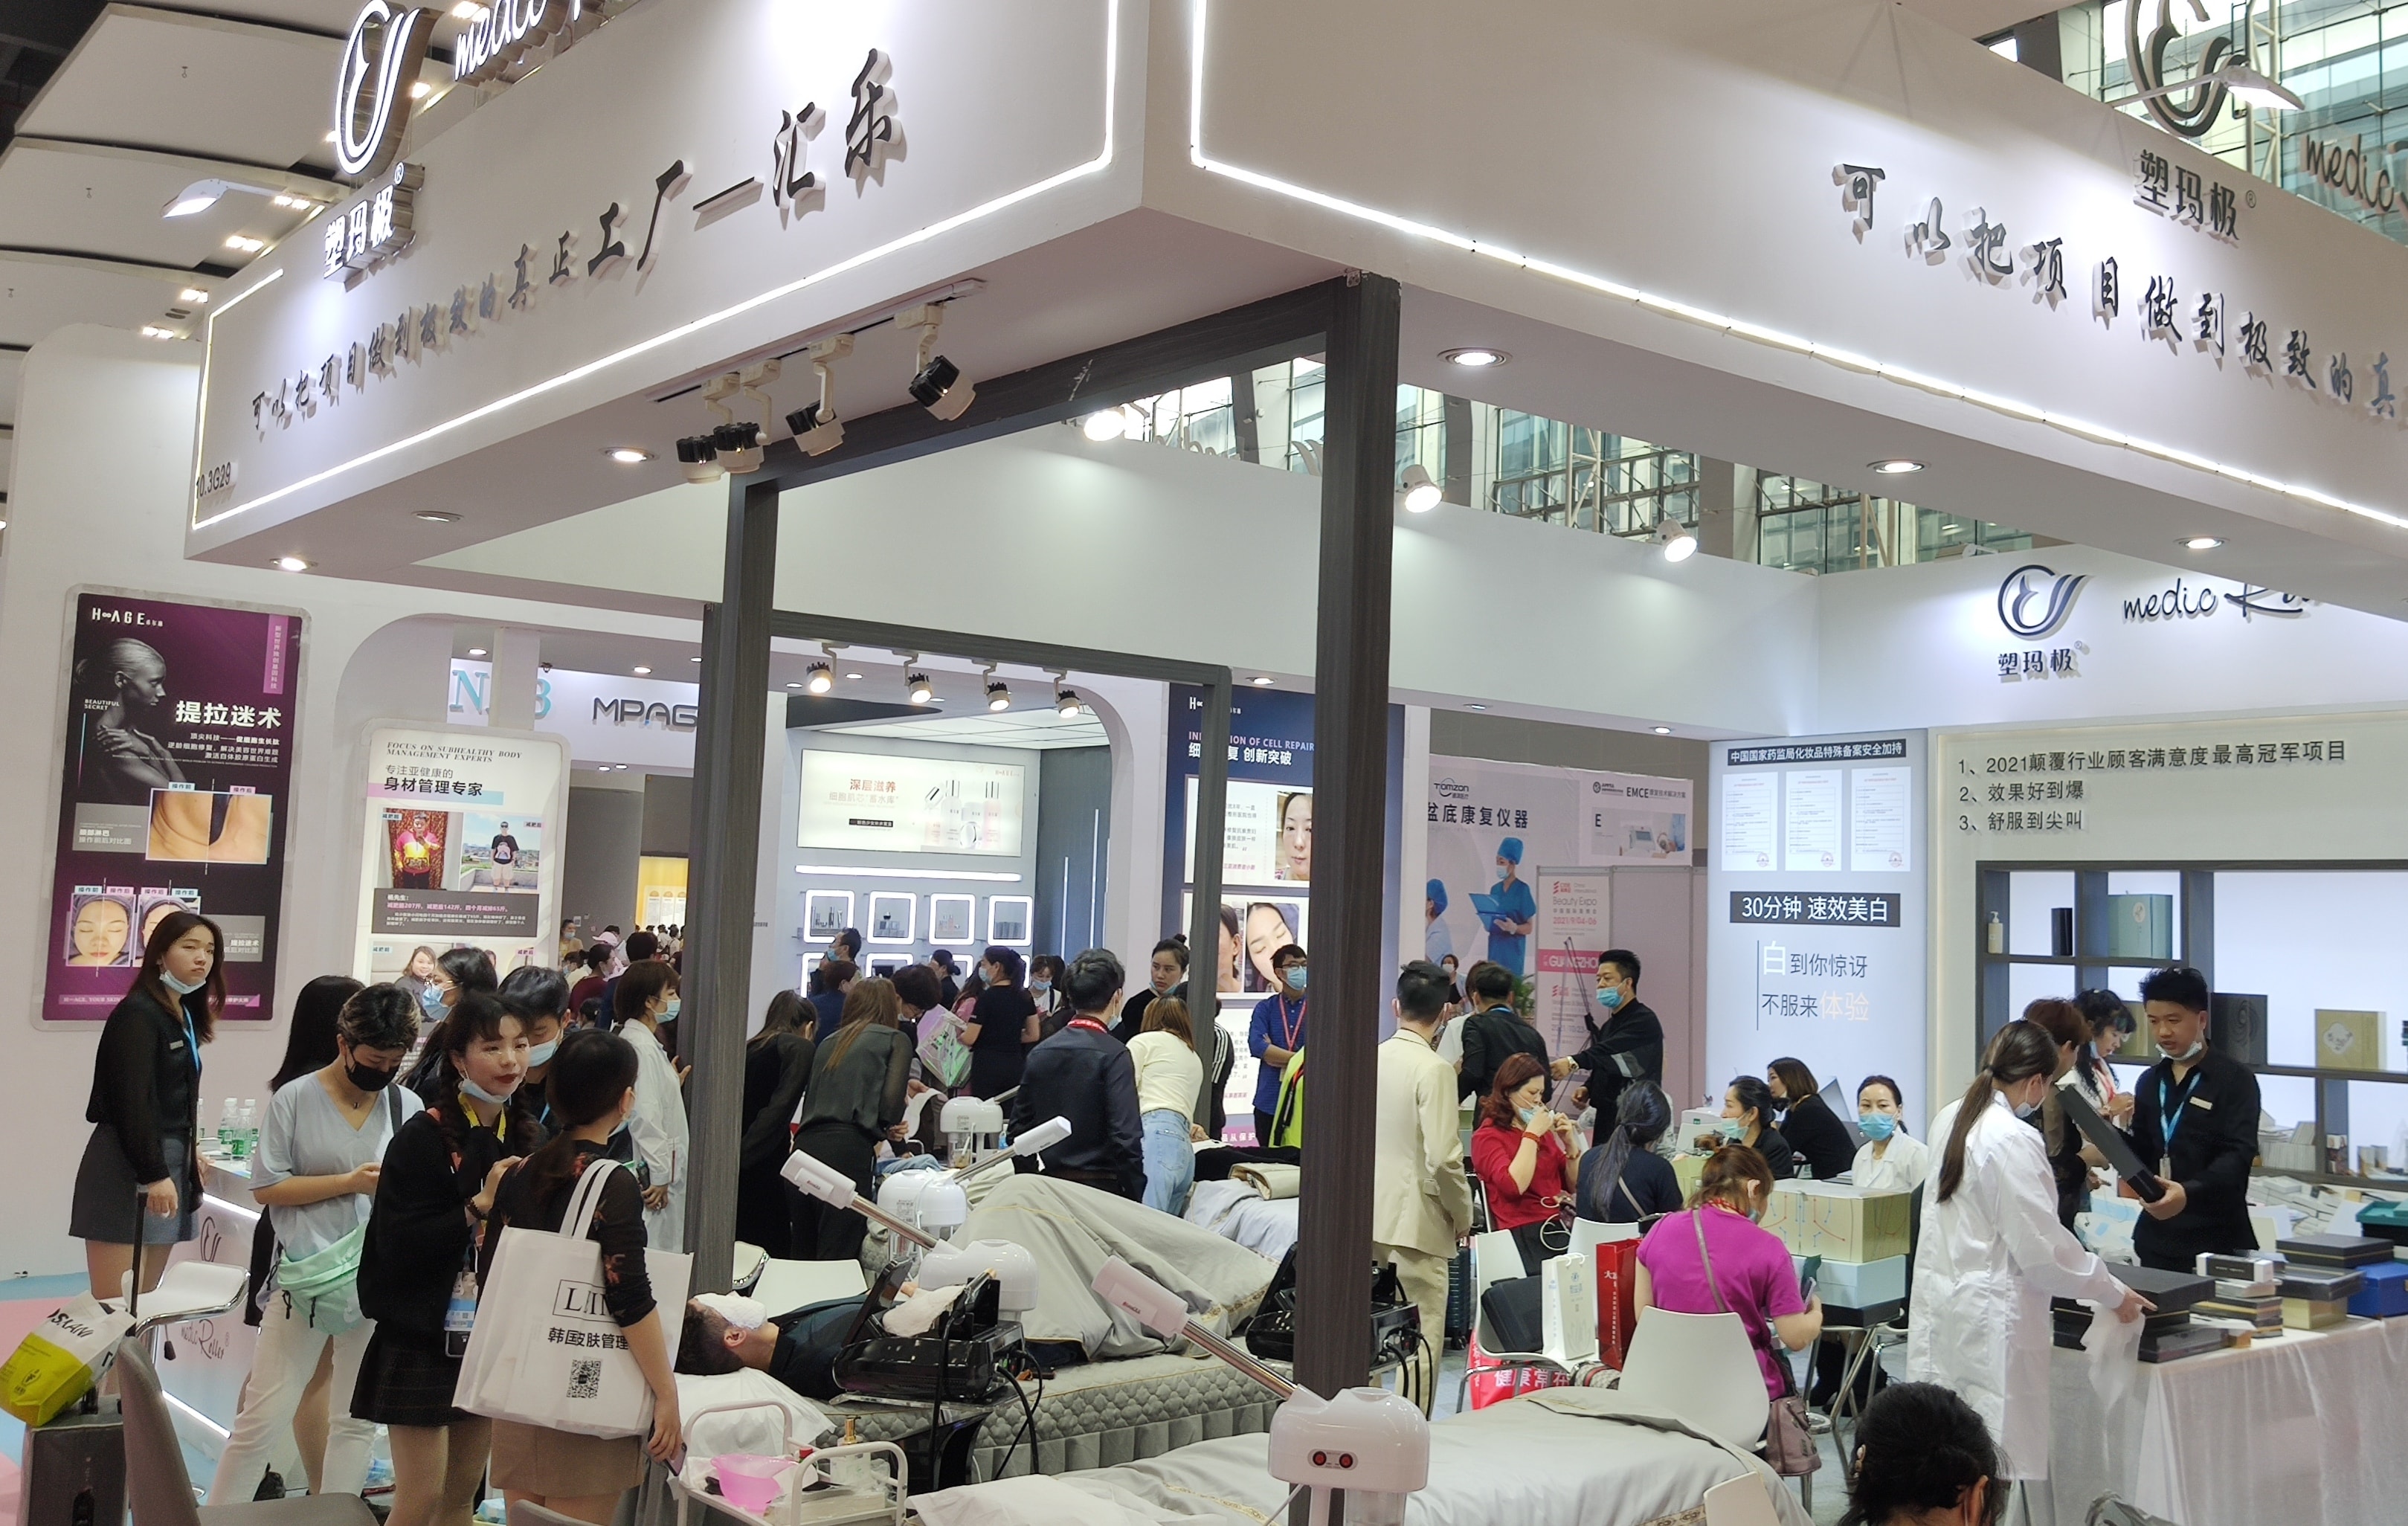 Huile took part in Guangzhou Meibo International Exhibition